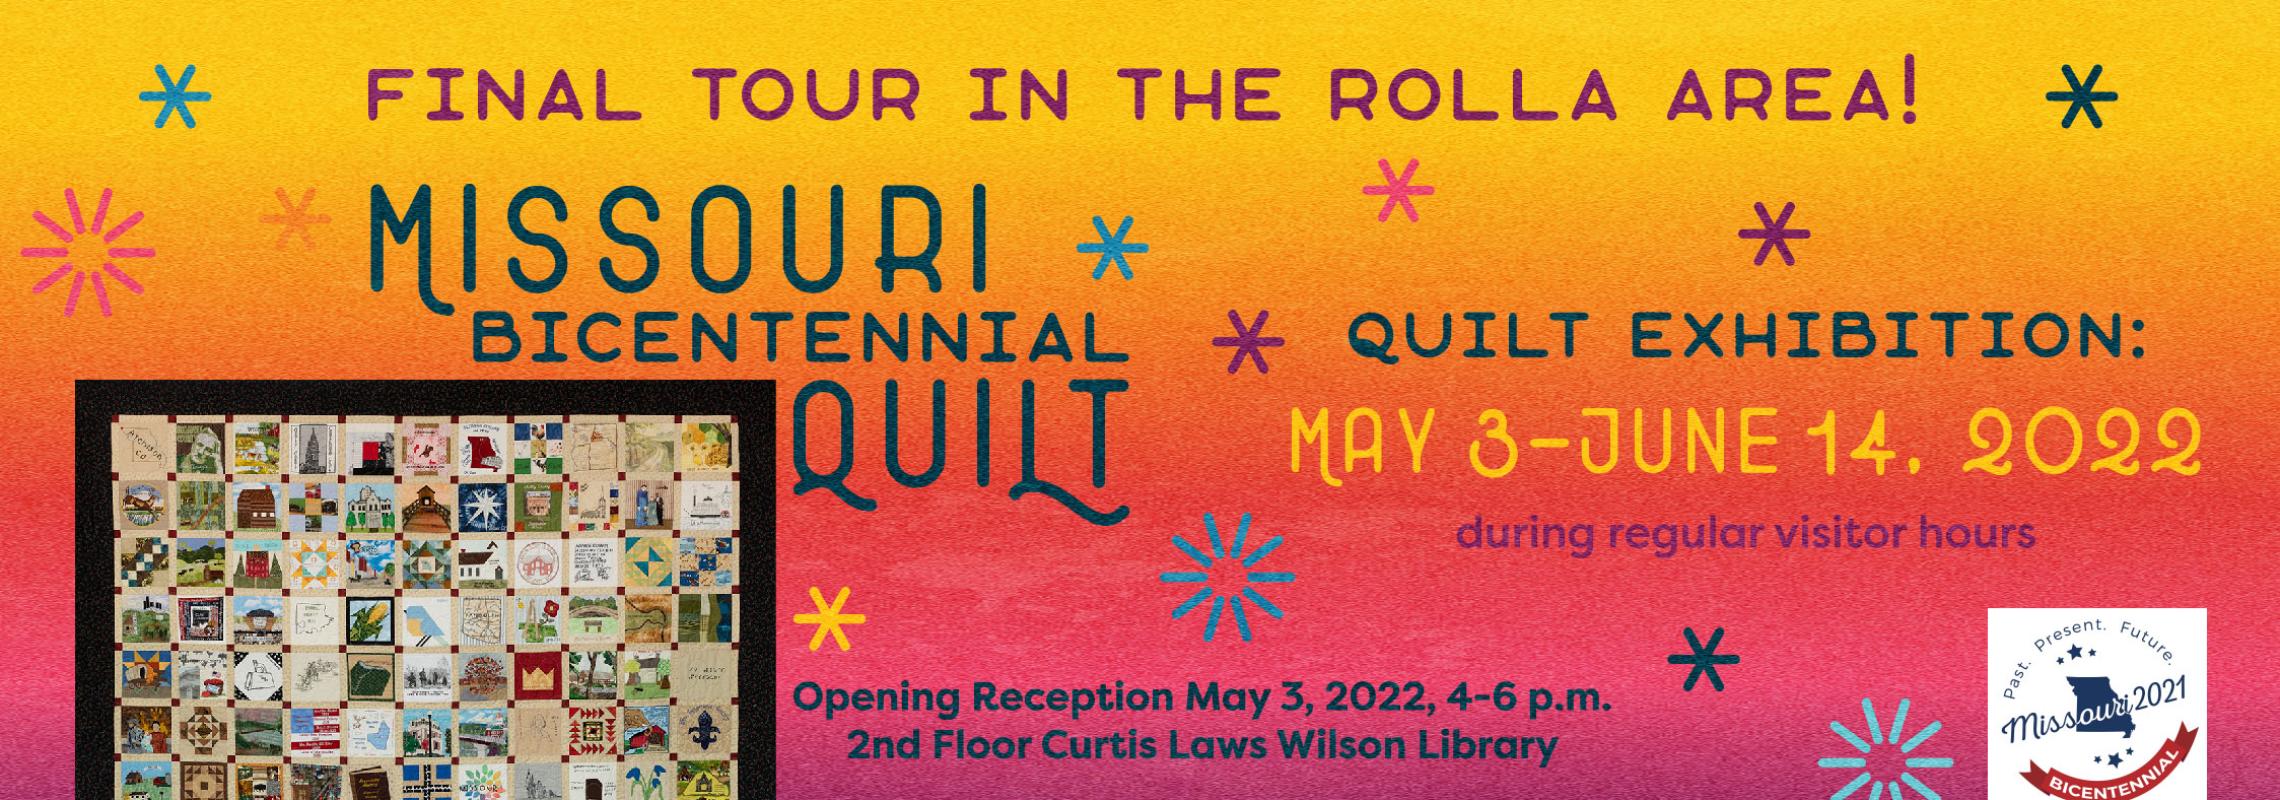 Missouri Bicentennial Quilt in Rolla May 3-June 14